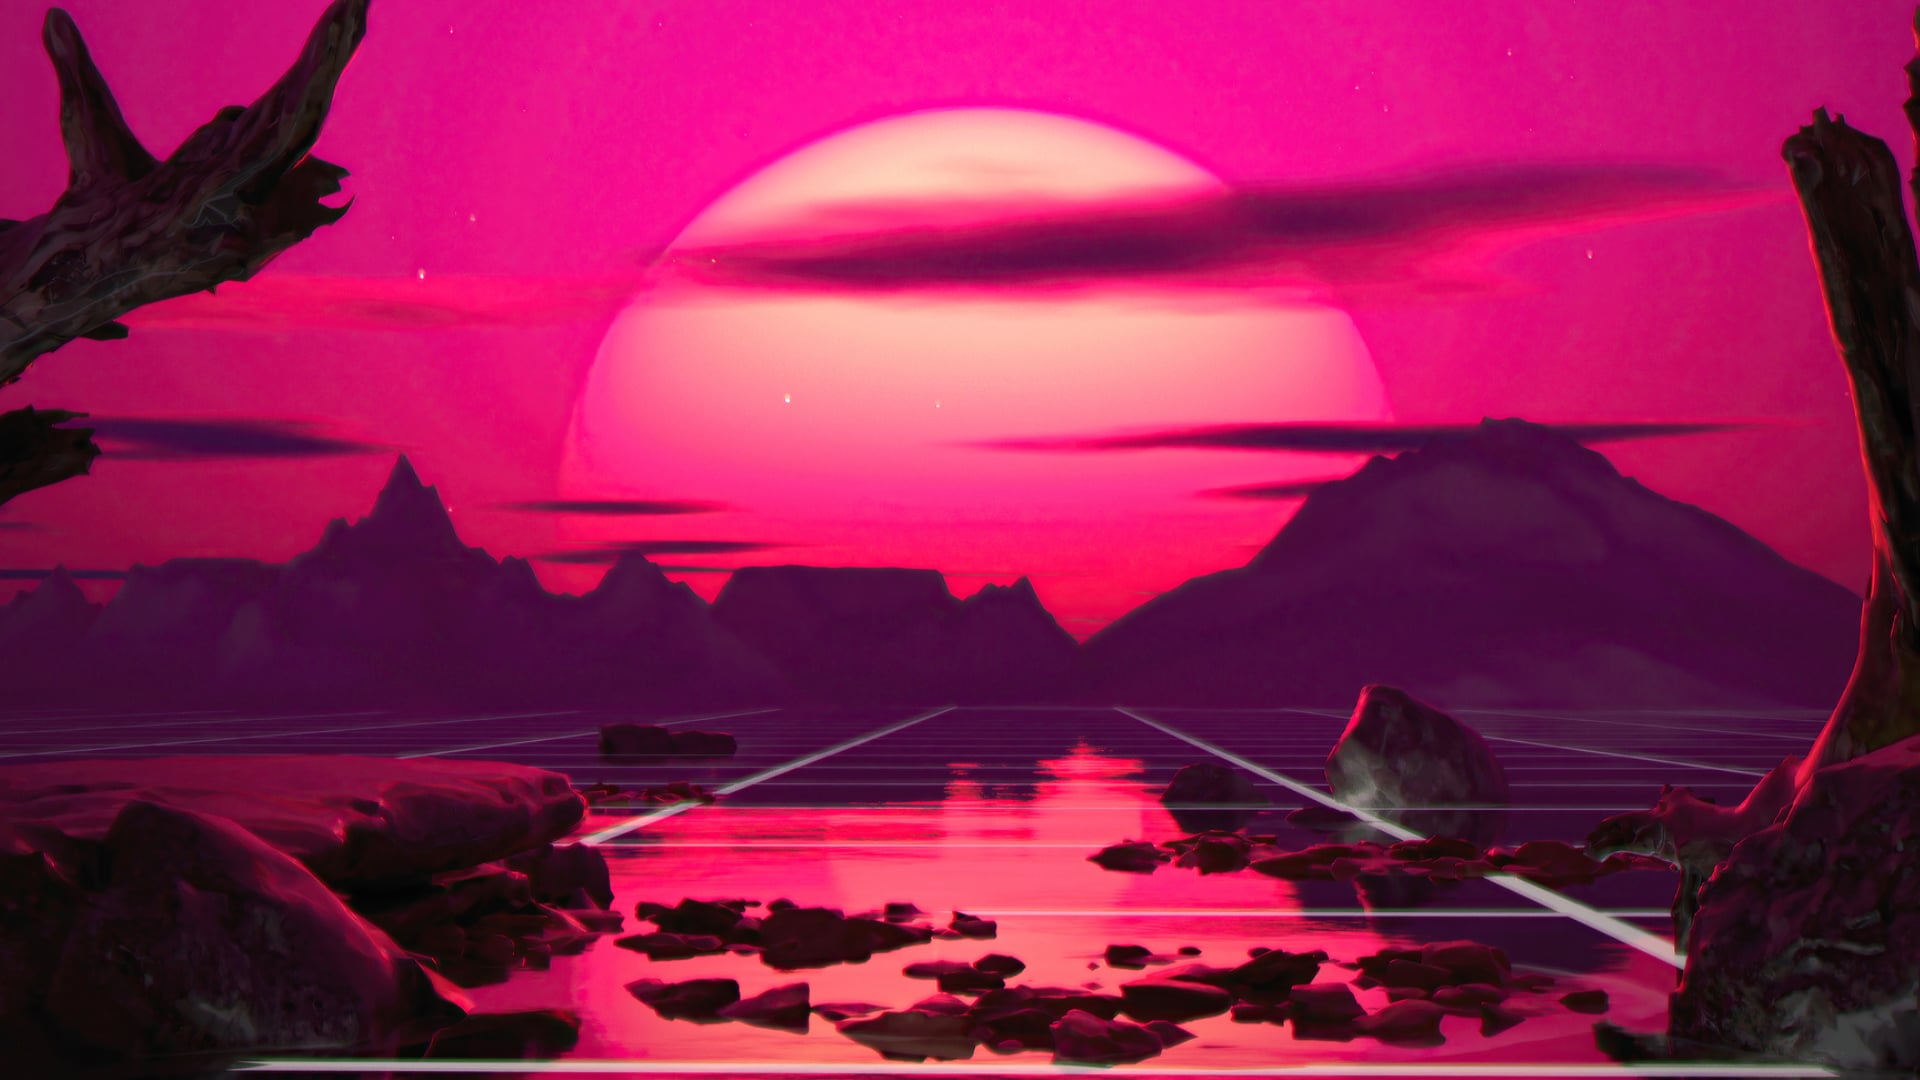 Digital Art Sunset at 2048 x 2048 iPad size wallpapers HD quality